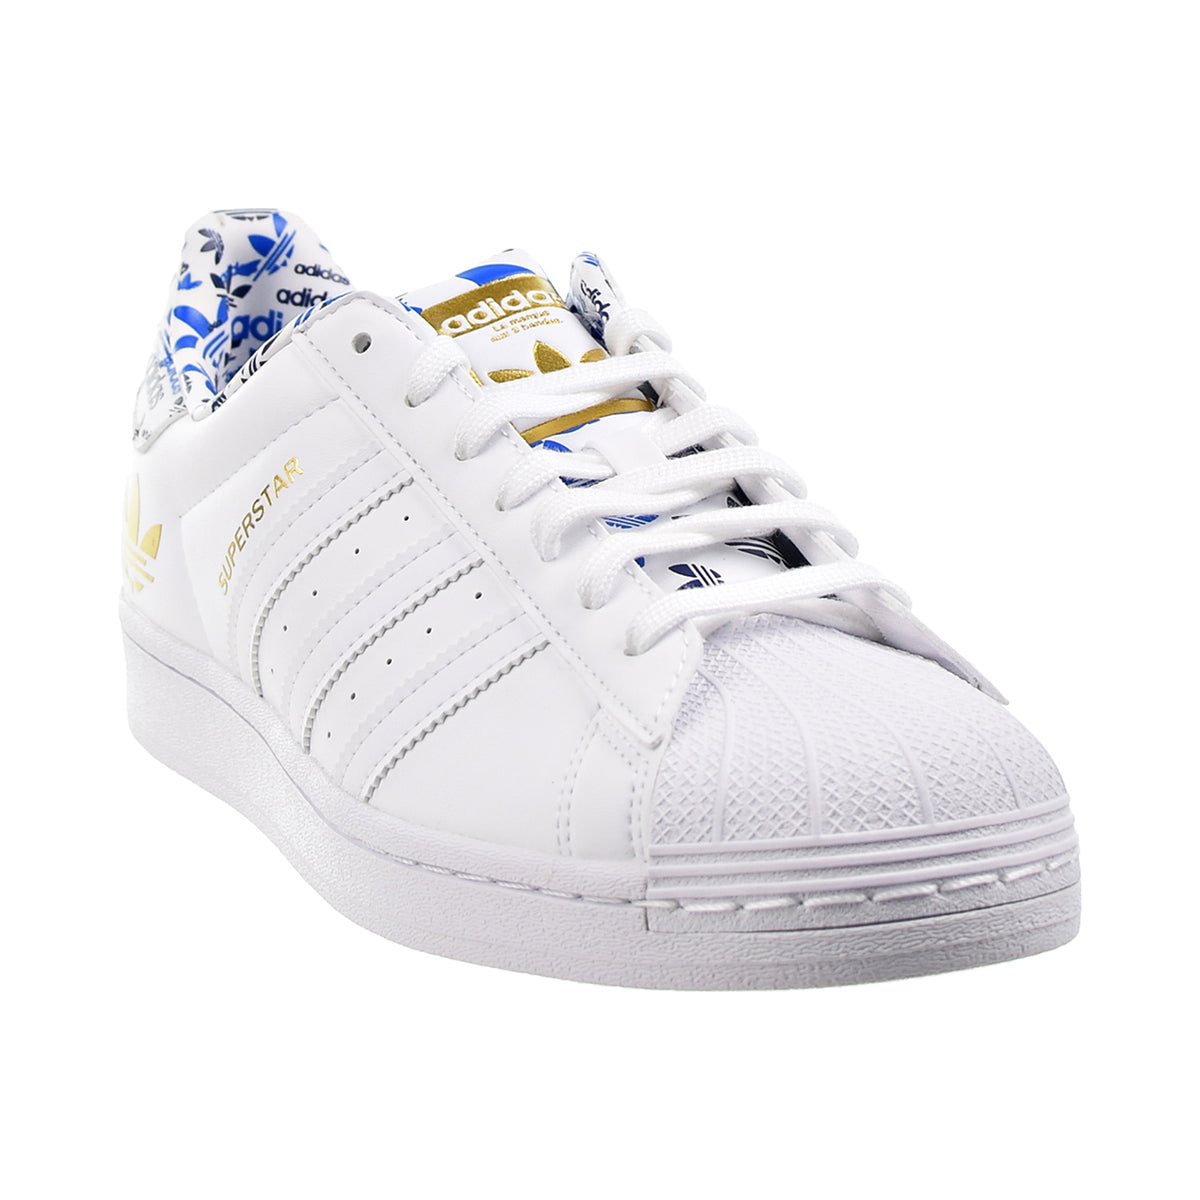 Cloud Superstar White-Gold Shoes Metallic-Blue Men\'s Adidas